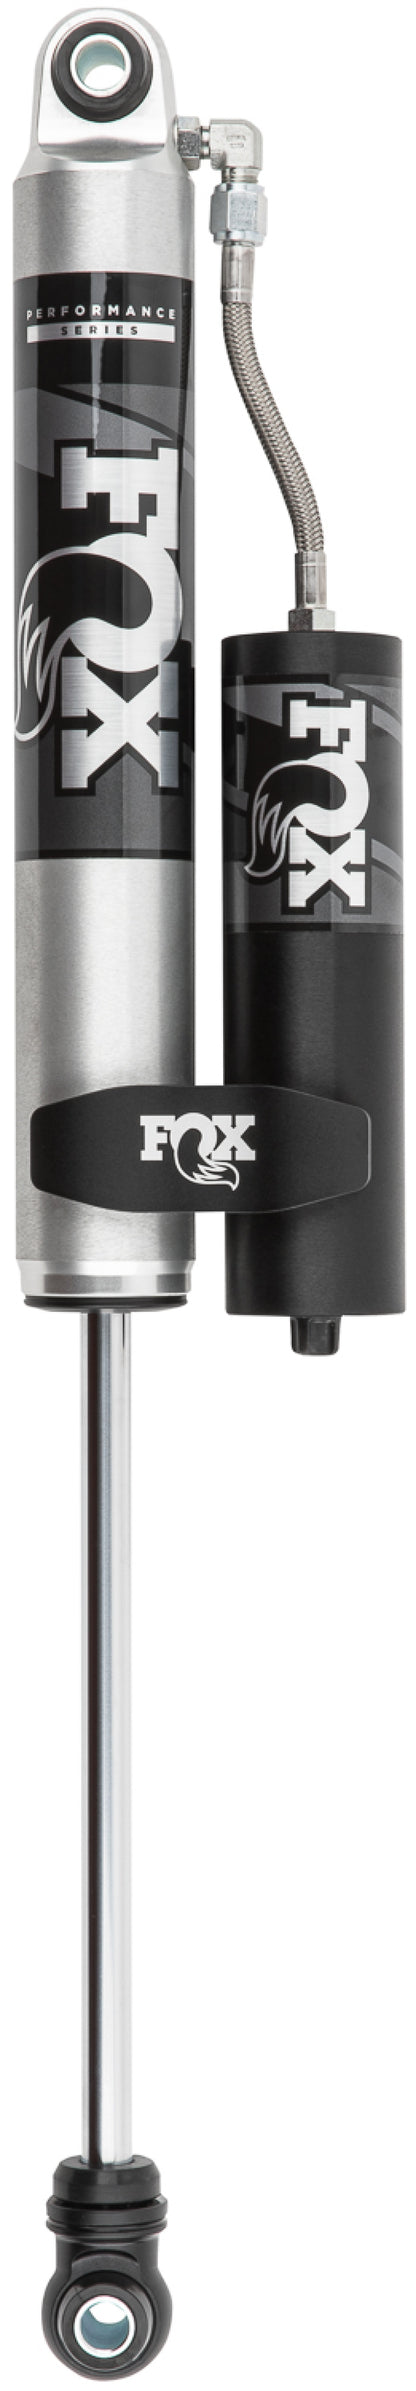 Fox 20+ GM 2500/3500 HD 2.0 Performance Series Smooth Body Reservoir Rear Shock 0-1in Lift